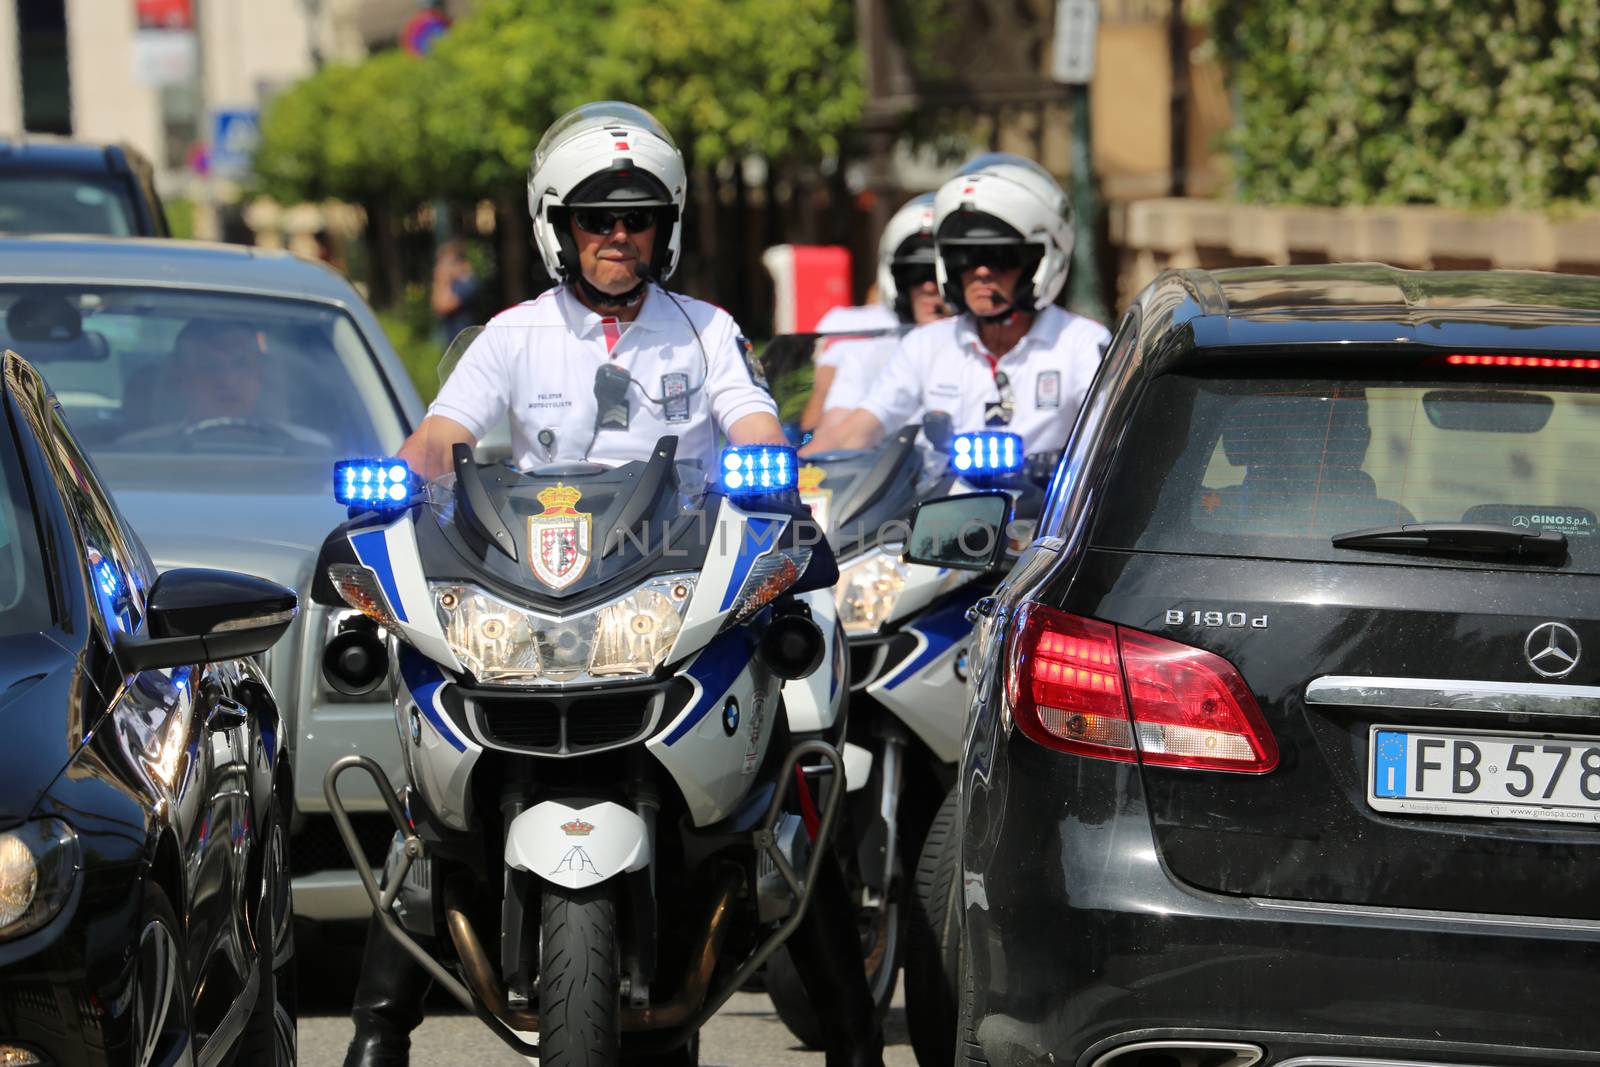  Police Motorcyclists Escort of the Prince of Monaco  by bensib